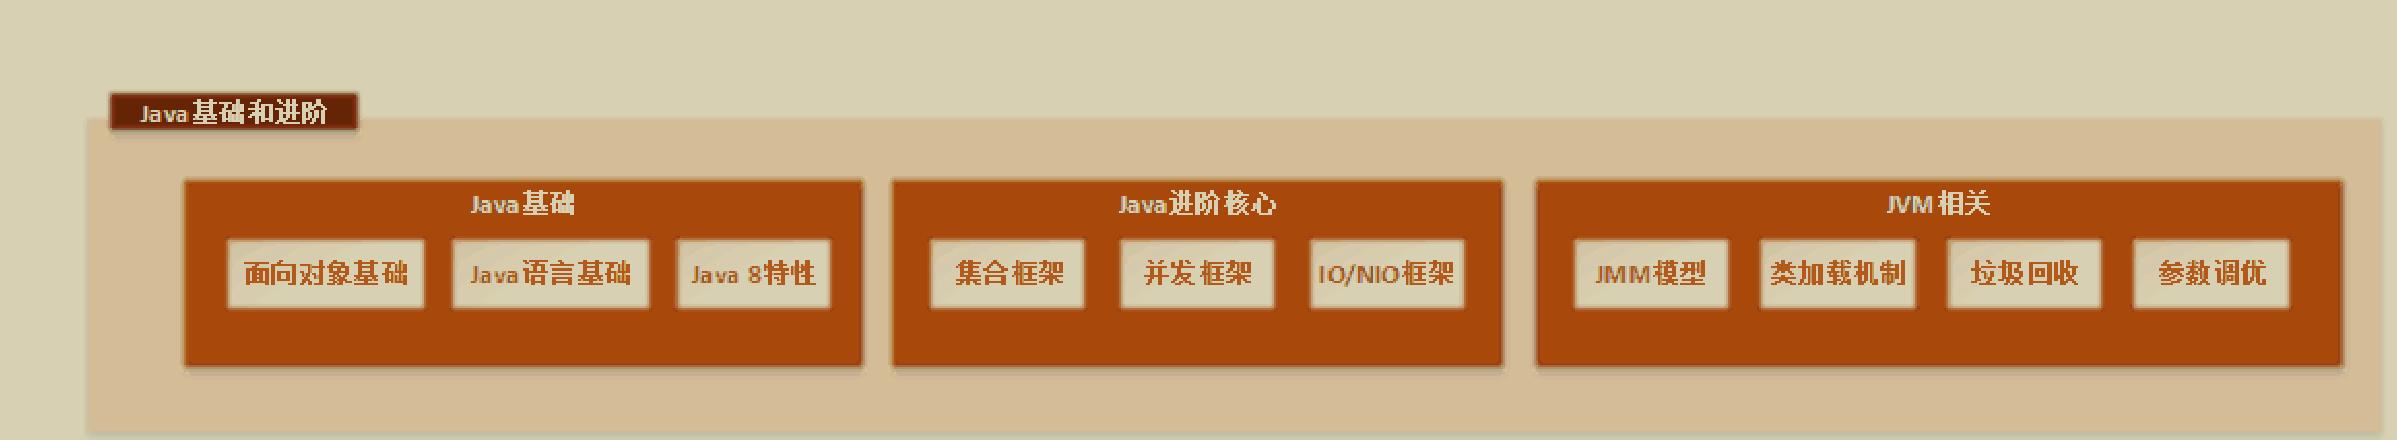 GitHub上标星120K!Alibaba官网发布了这份Java全栈知识体系手册